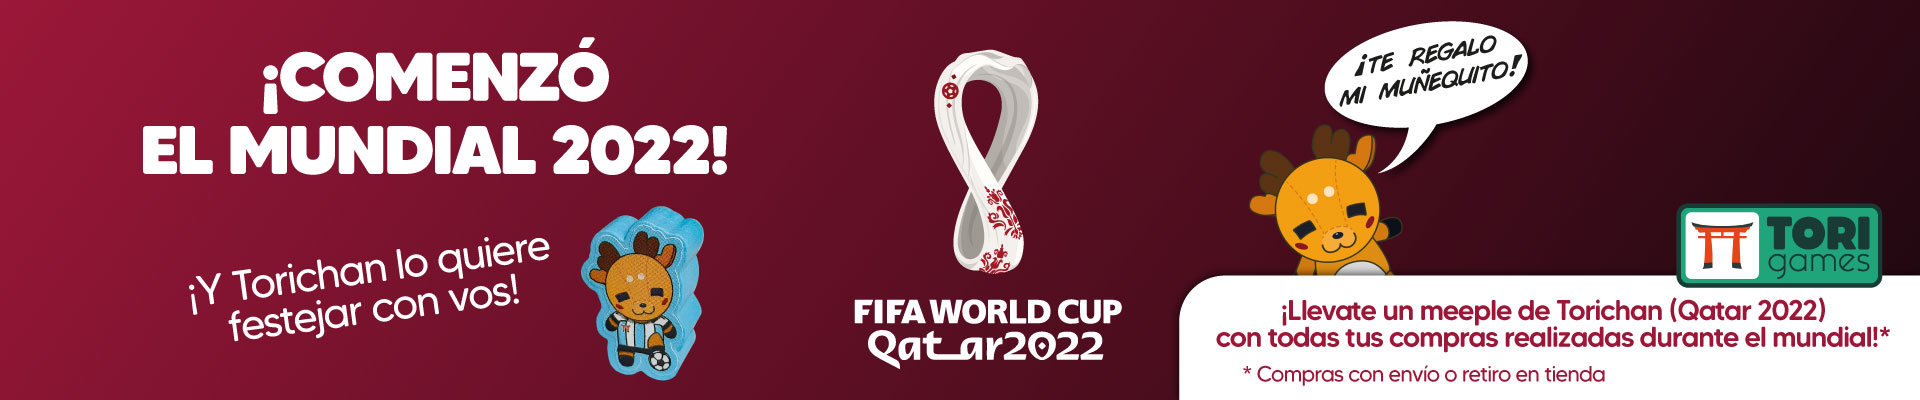 qatar-2022-banner-pc